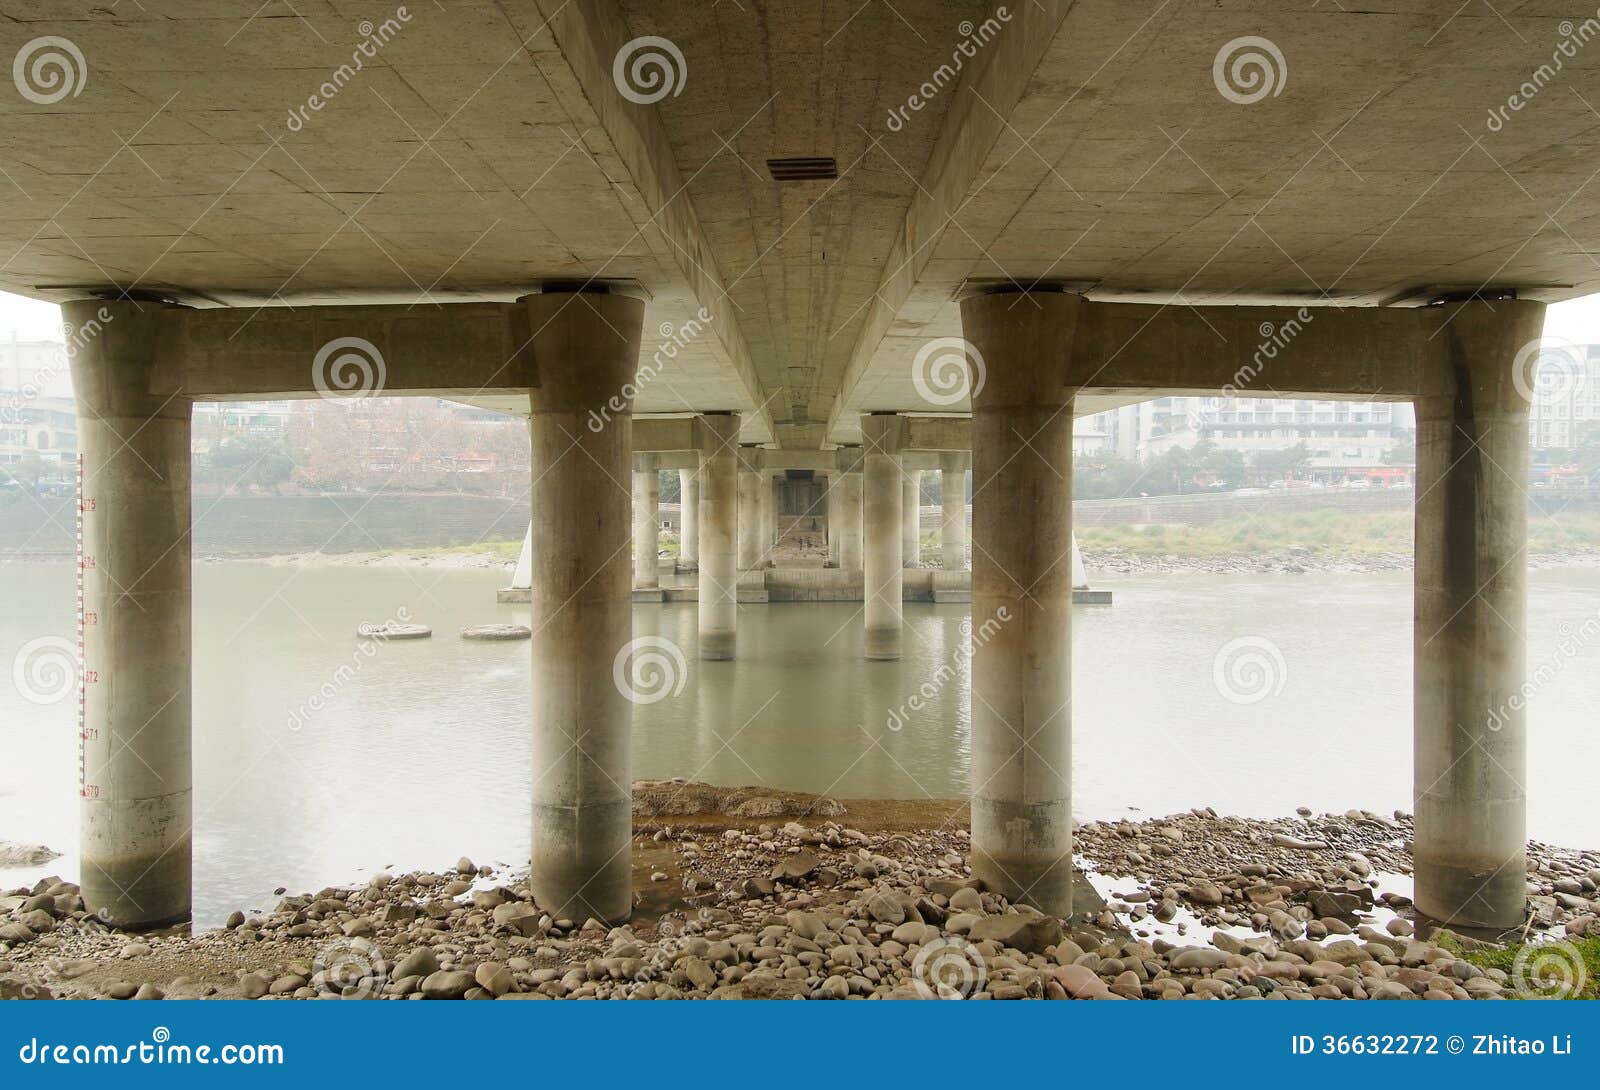 the piers of a bridge